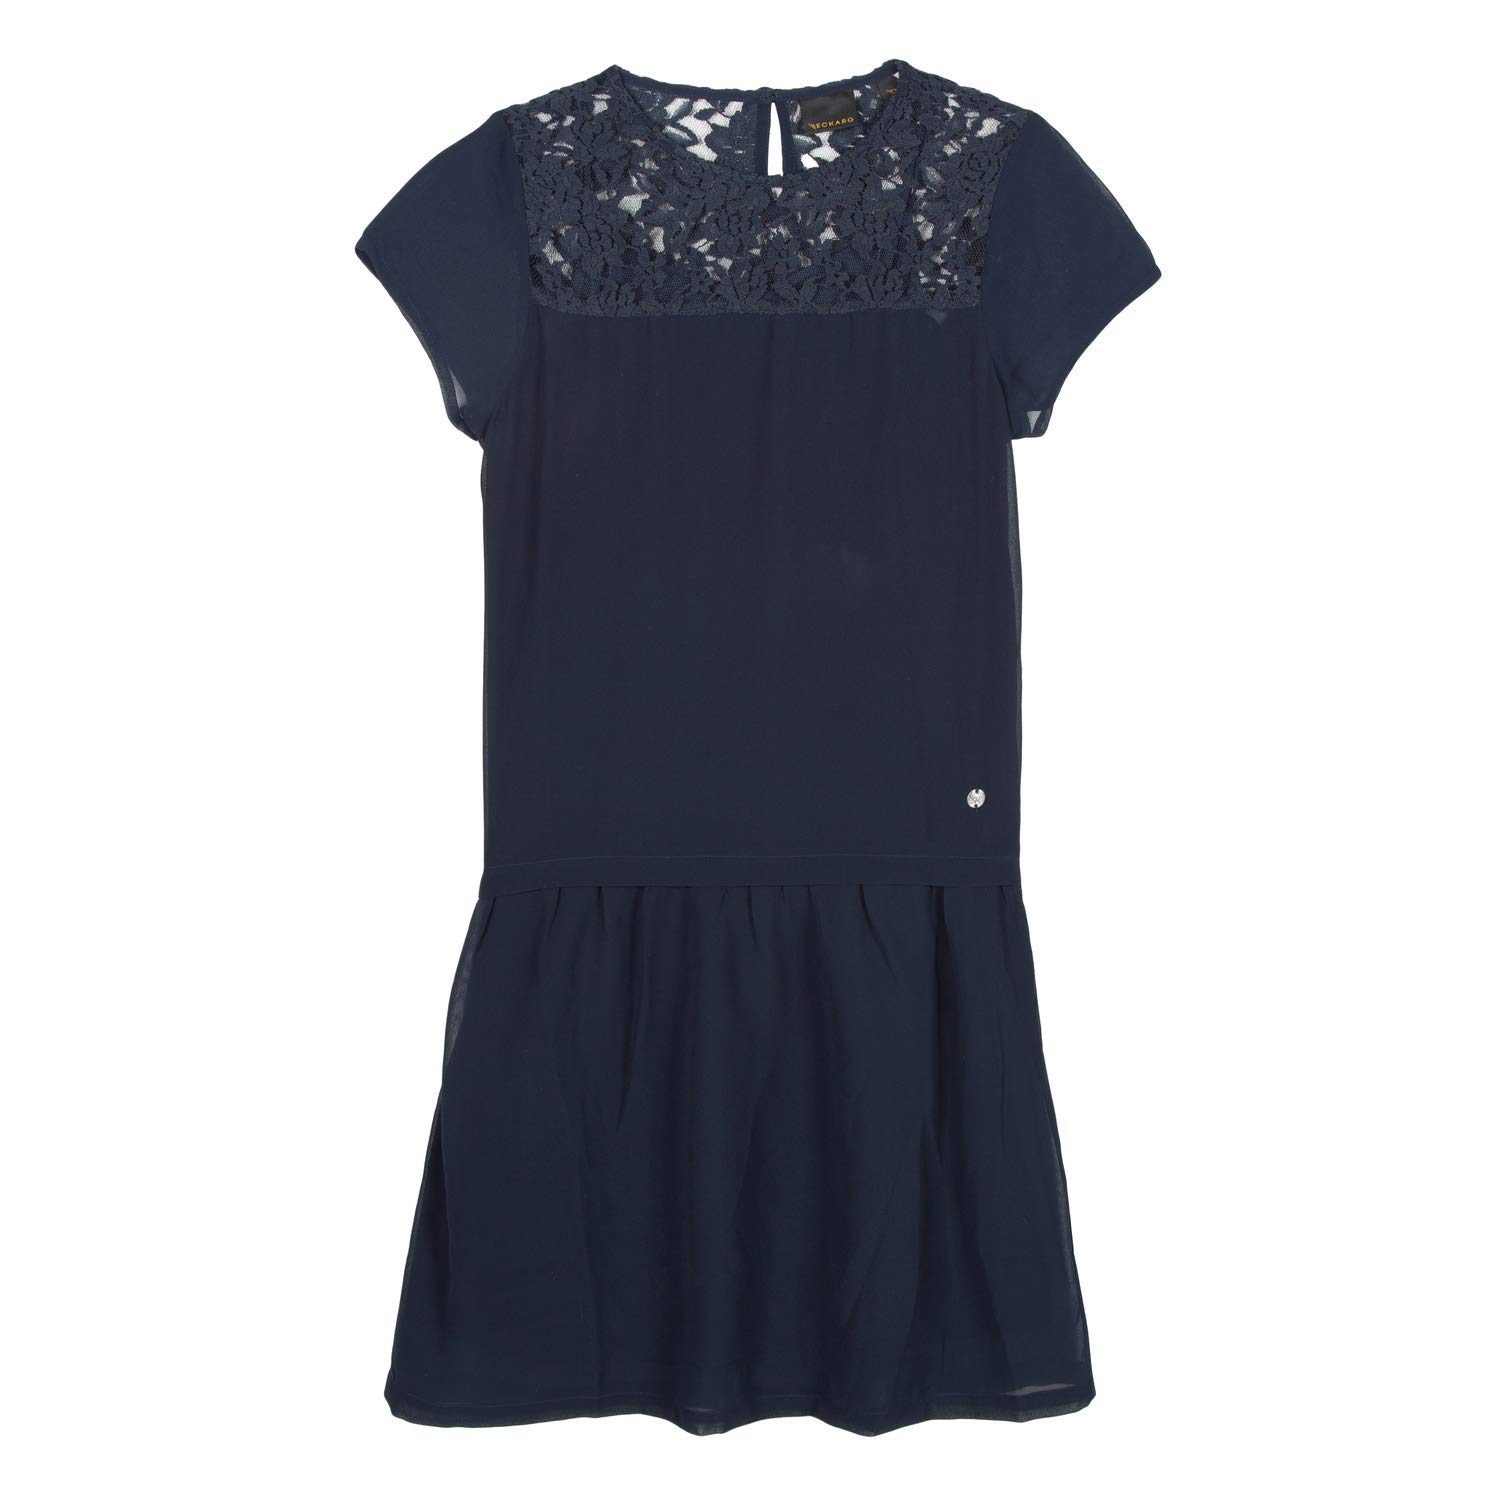 B-KARO Mädchen 3n30046 49 Dress Kleid, Blau (Navy Blue 49), Small